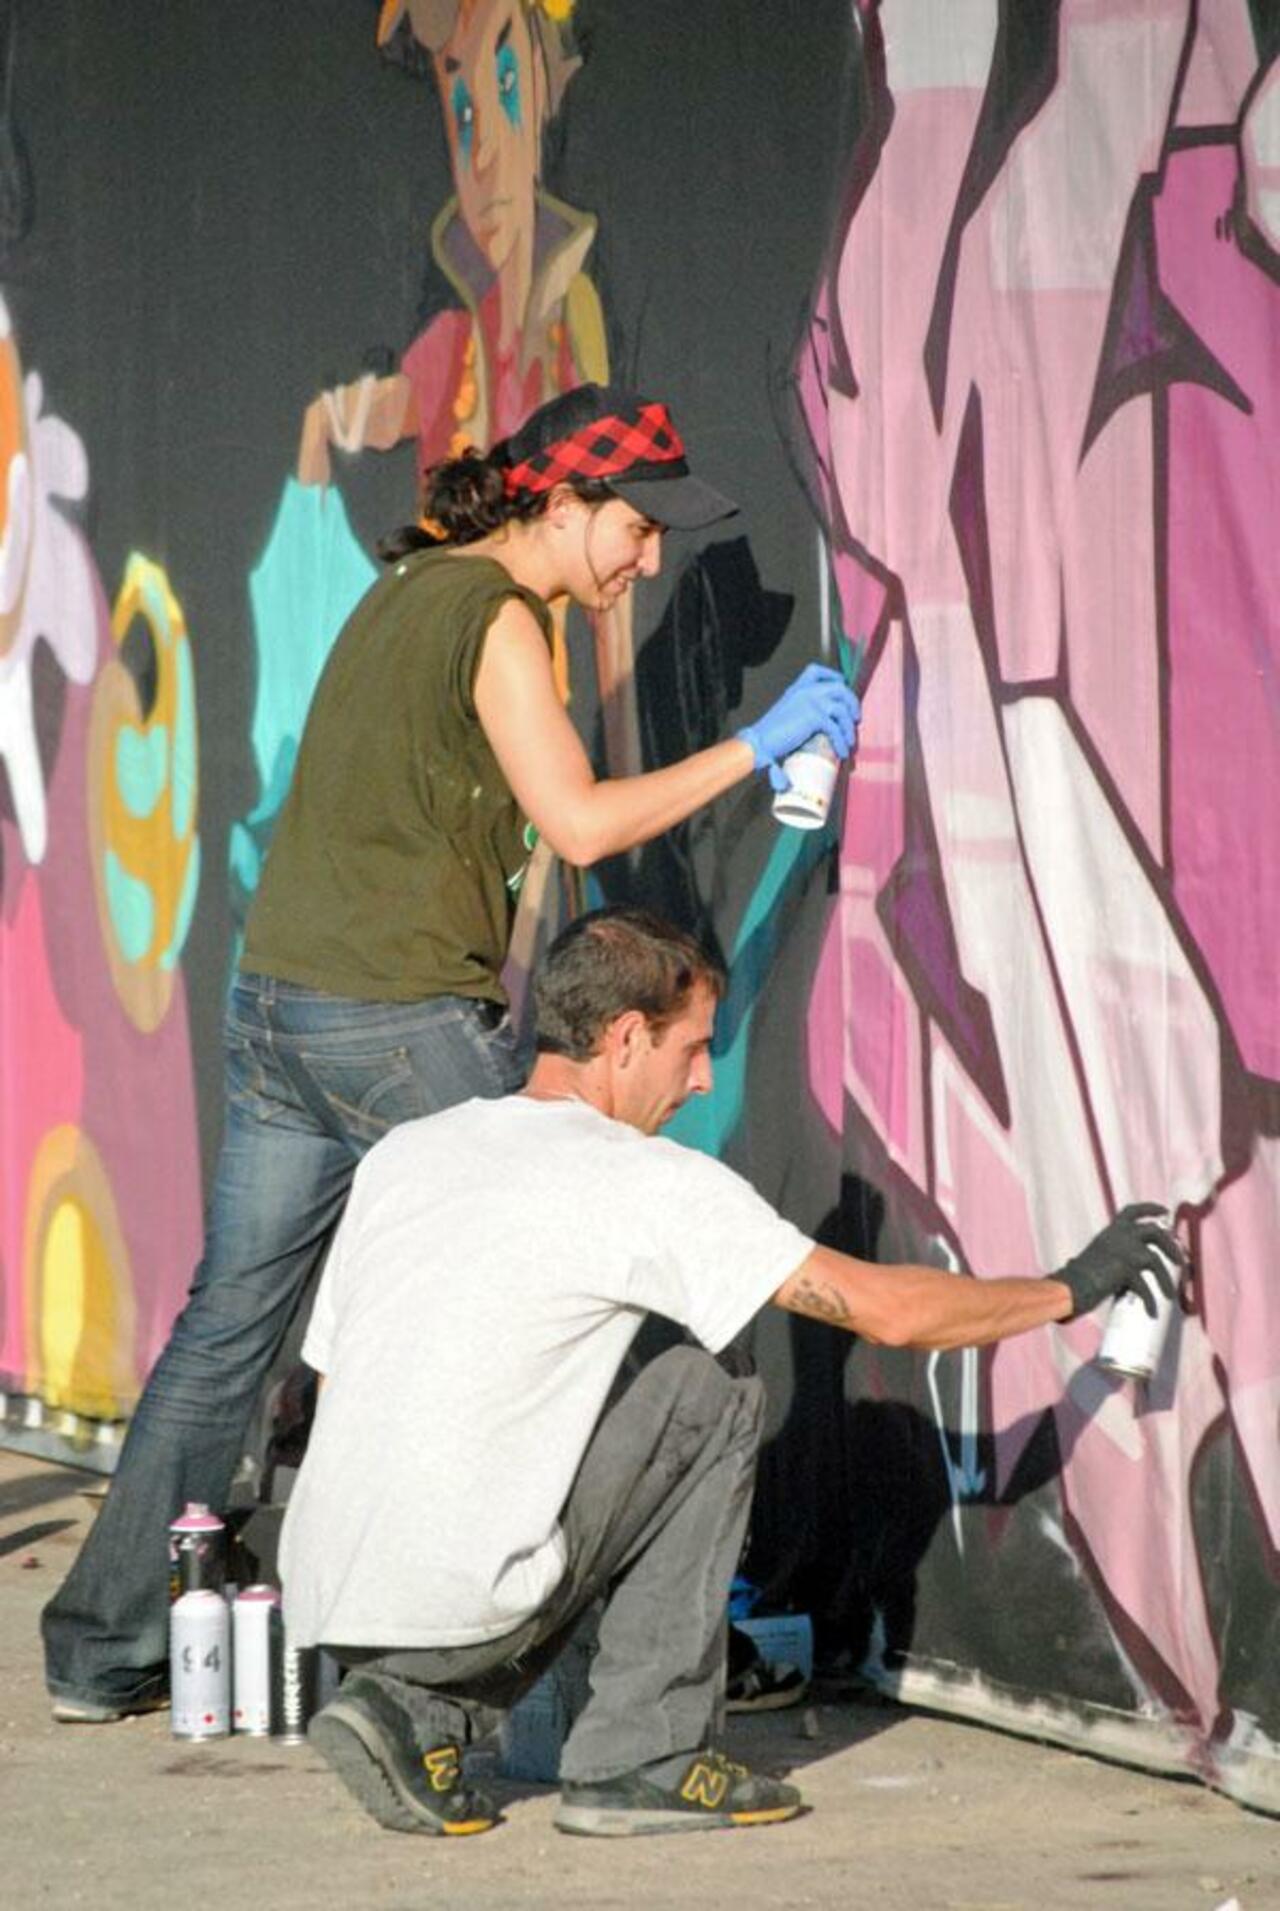 spray artist at Ribazo #graffiti fest #Zaragoza #urbanart #streetart #streetps http://t.co/hXcsoaAv06